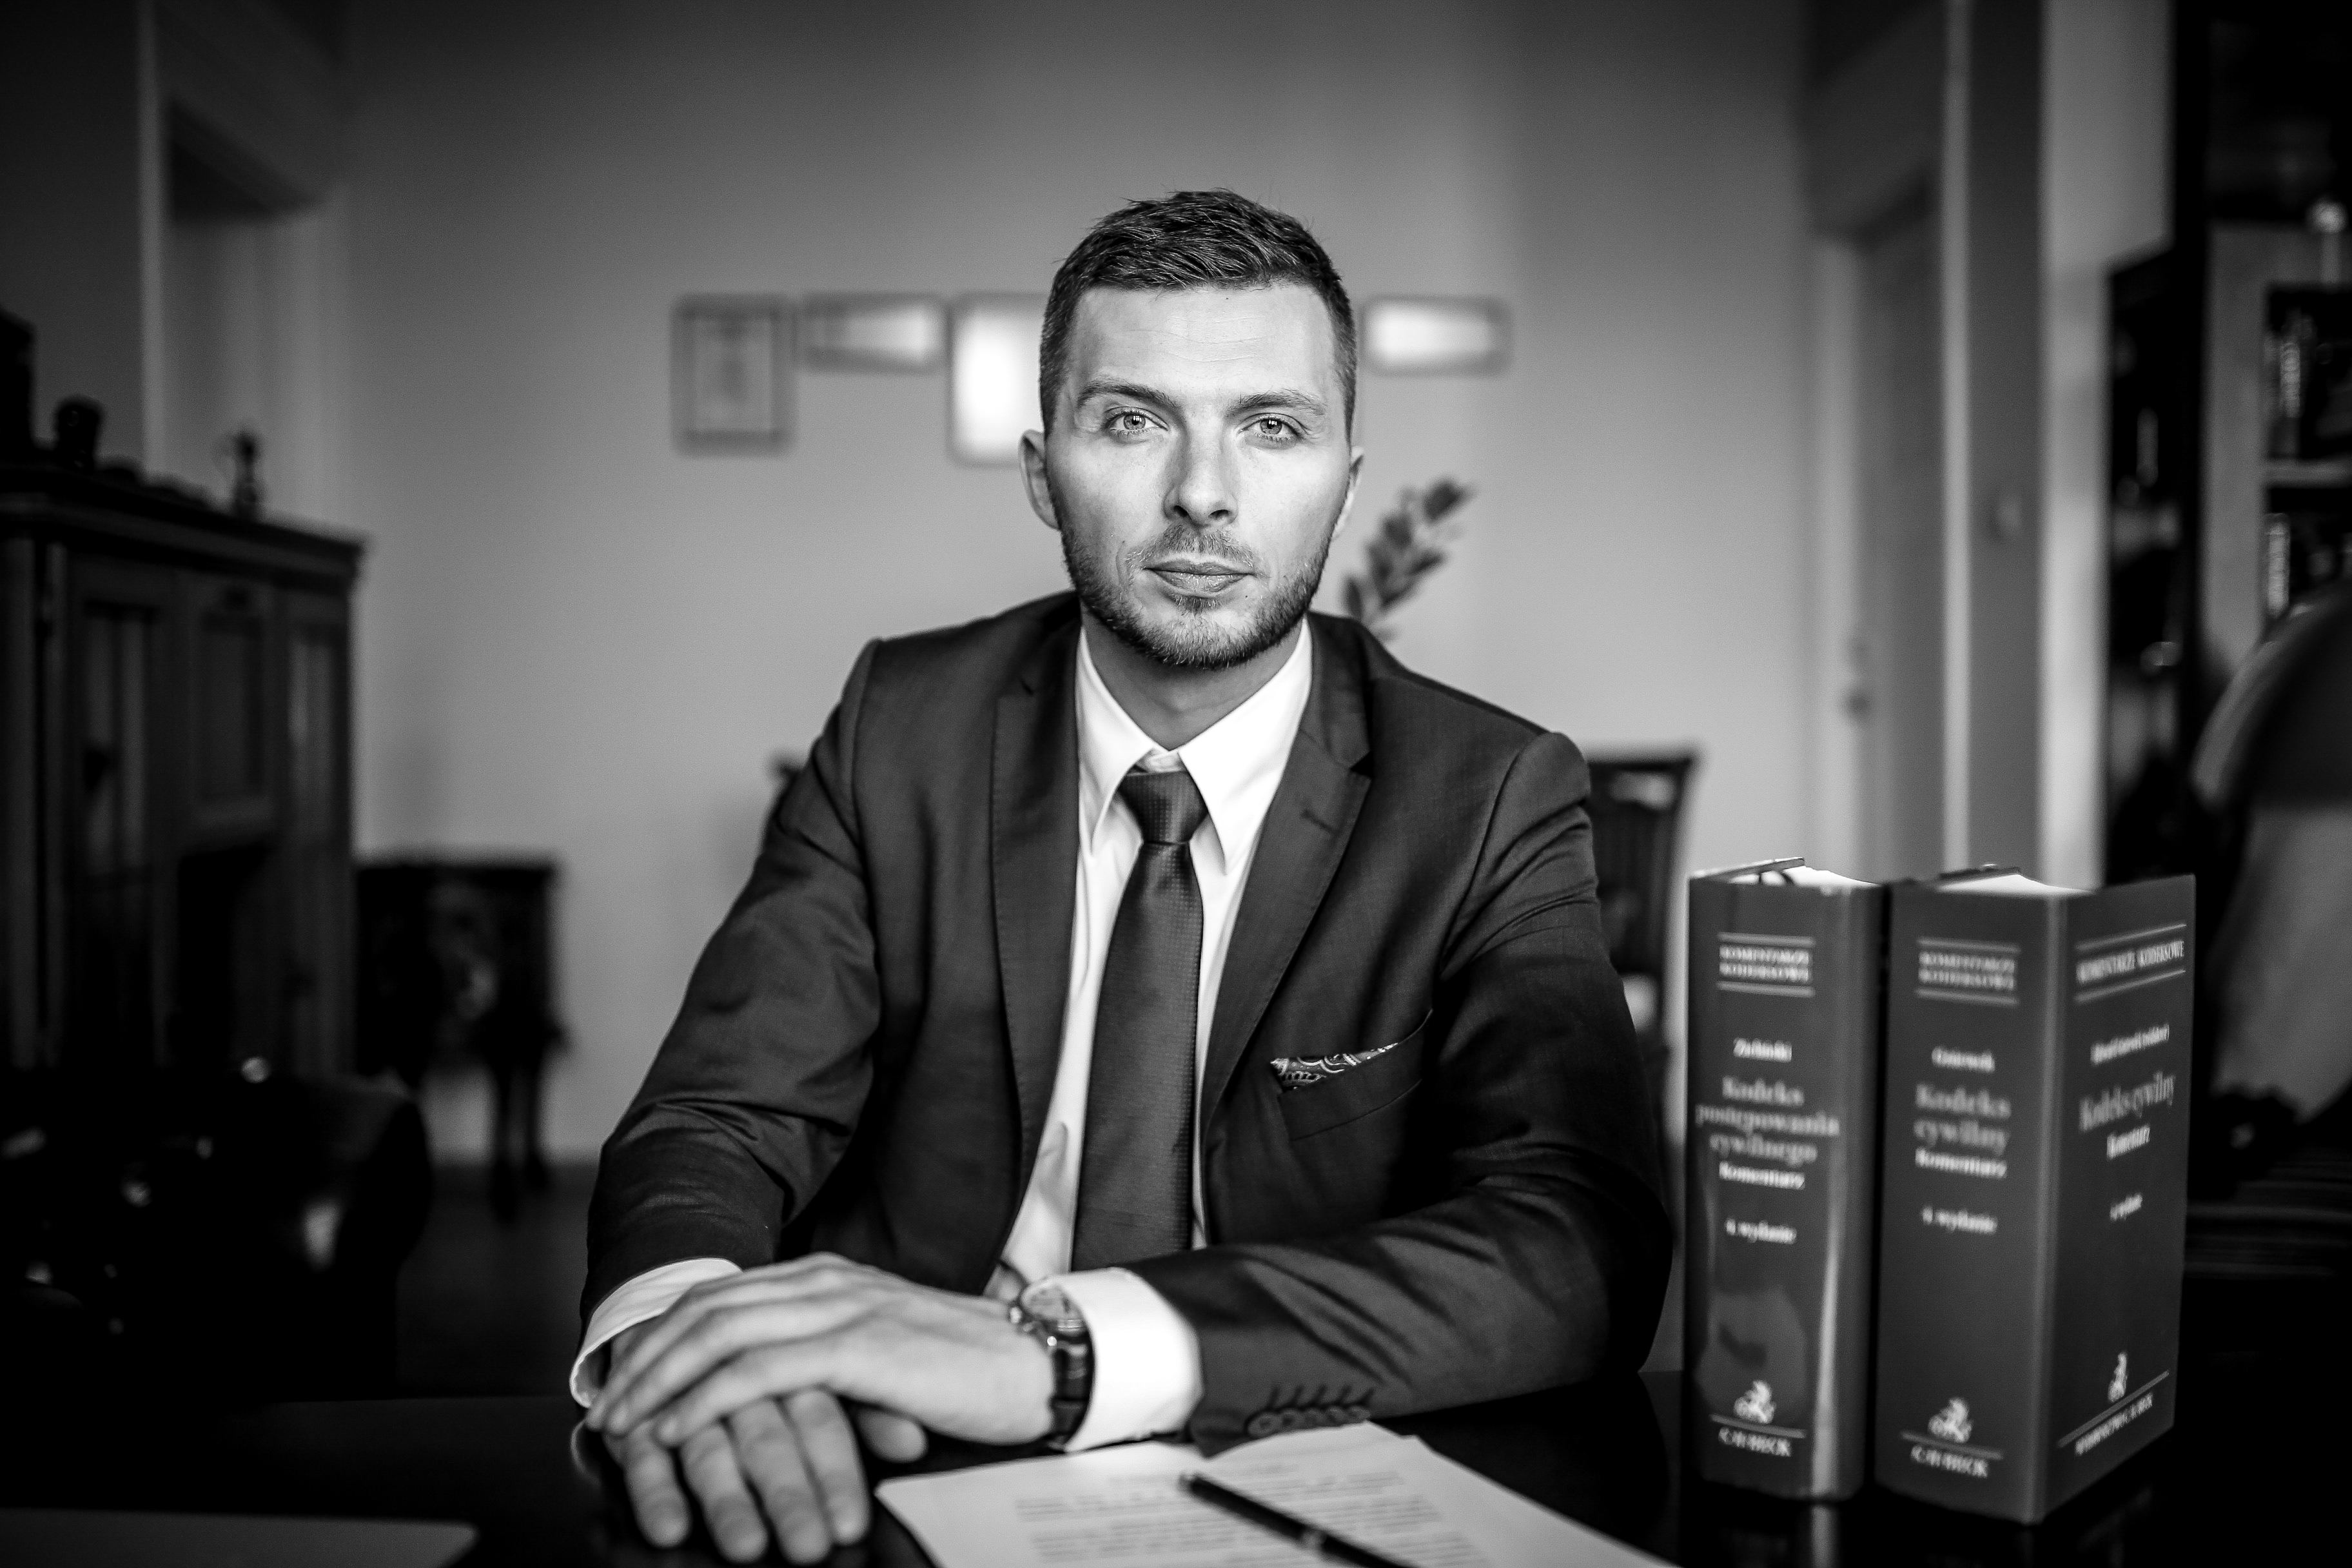 Adwokat Wojciech Borowik